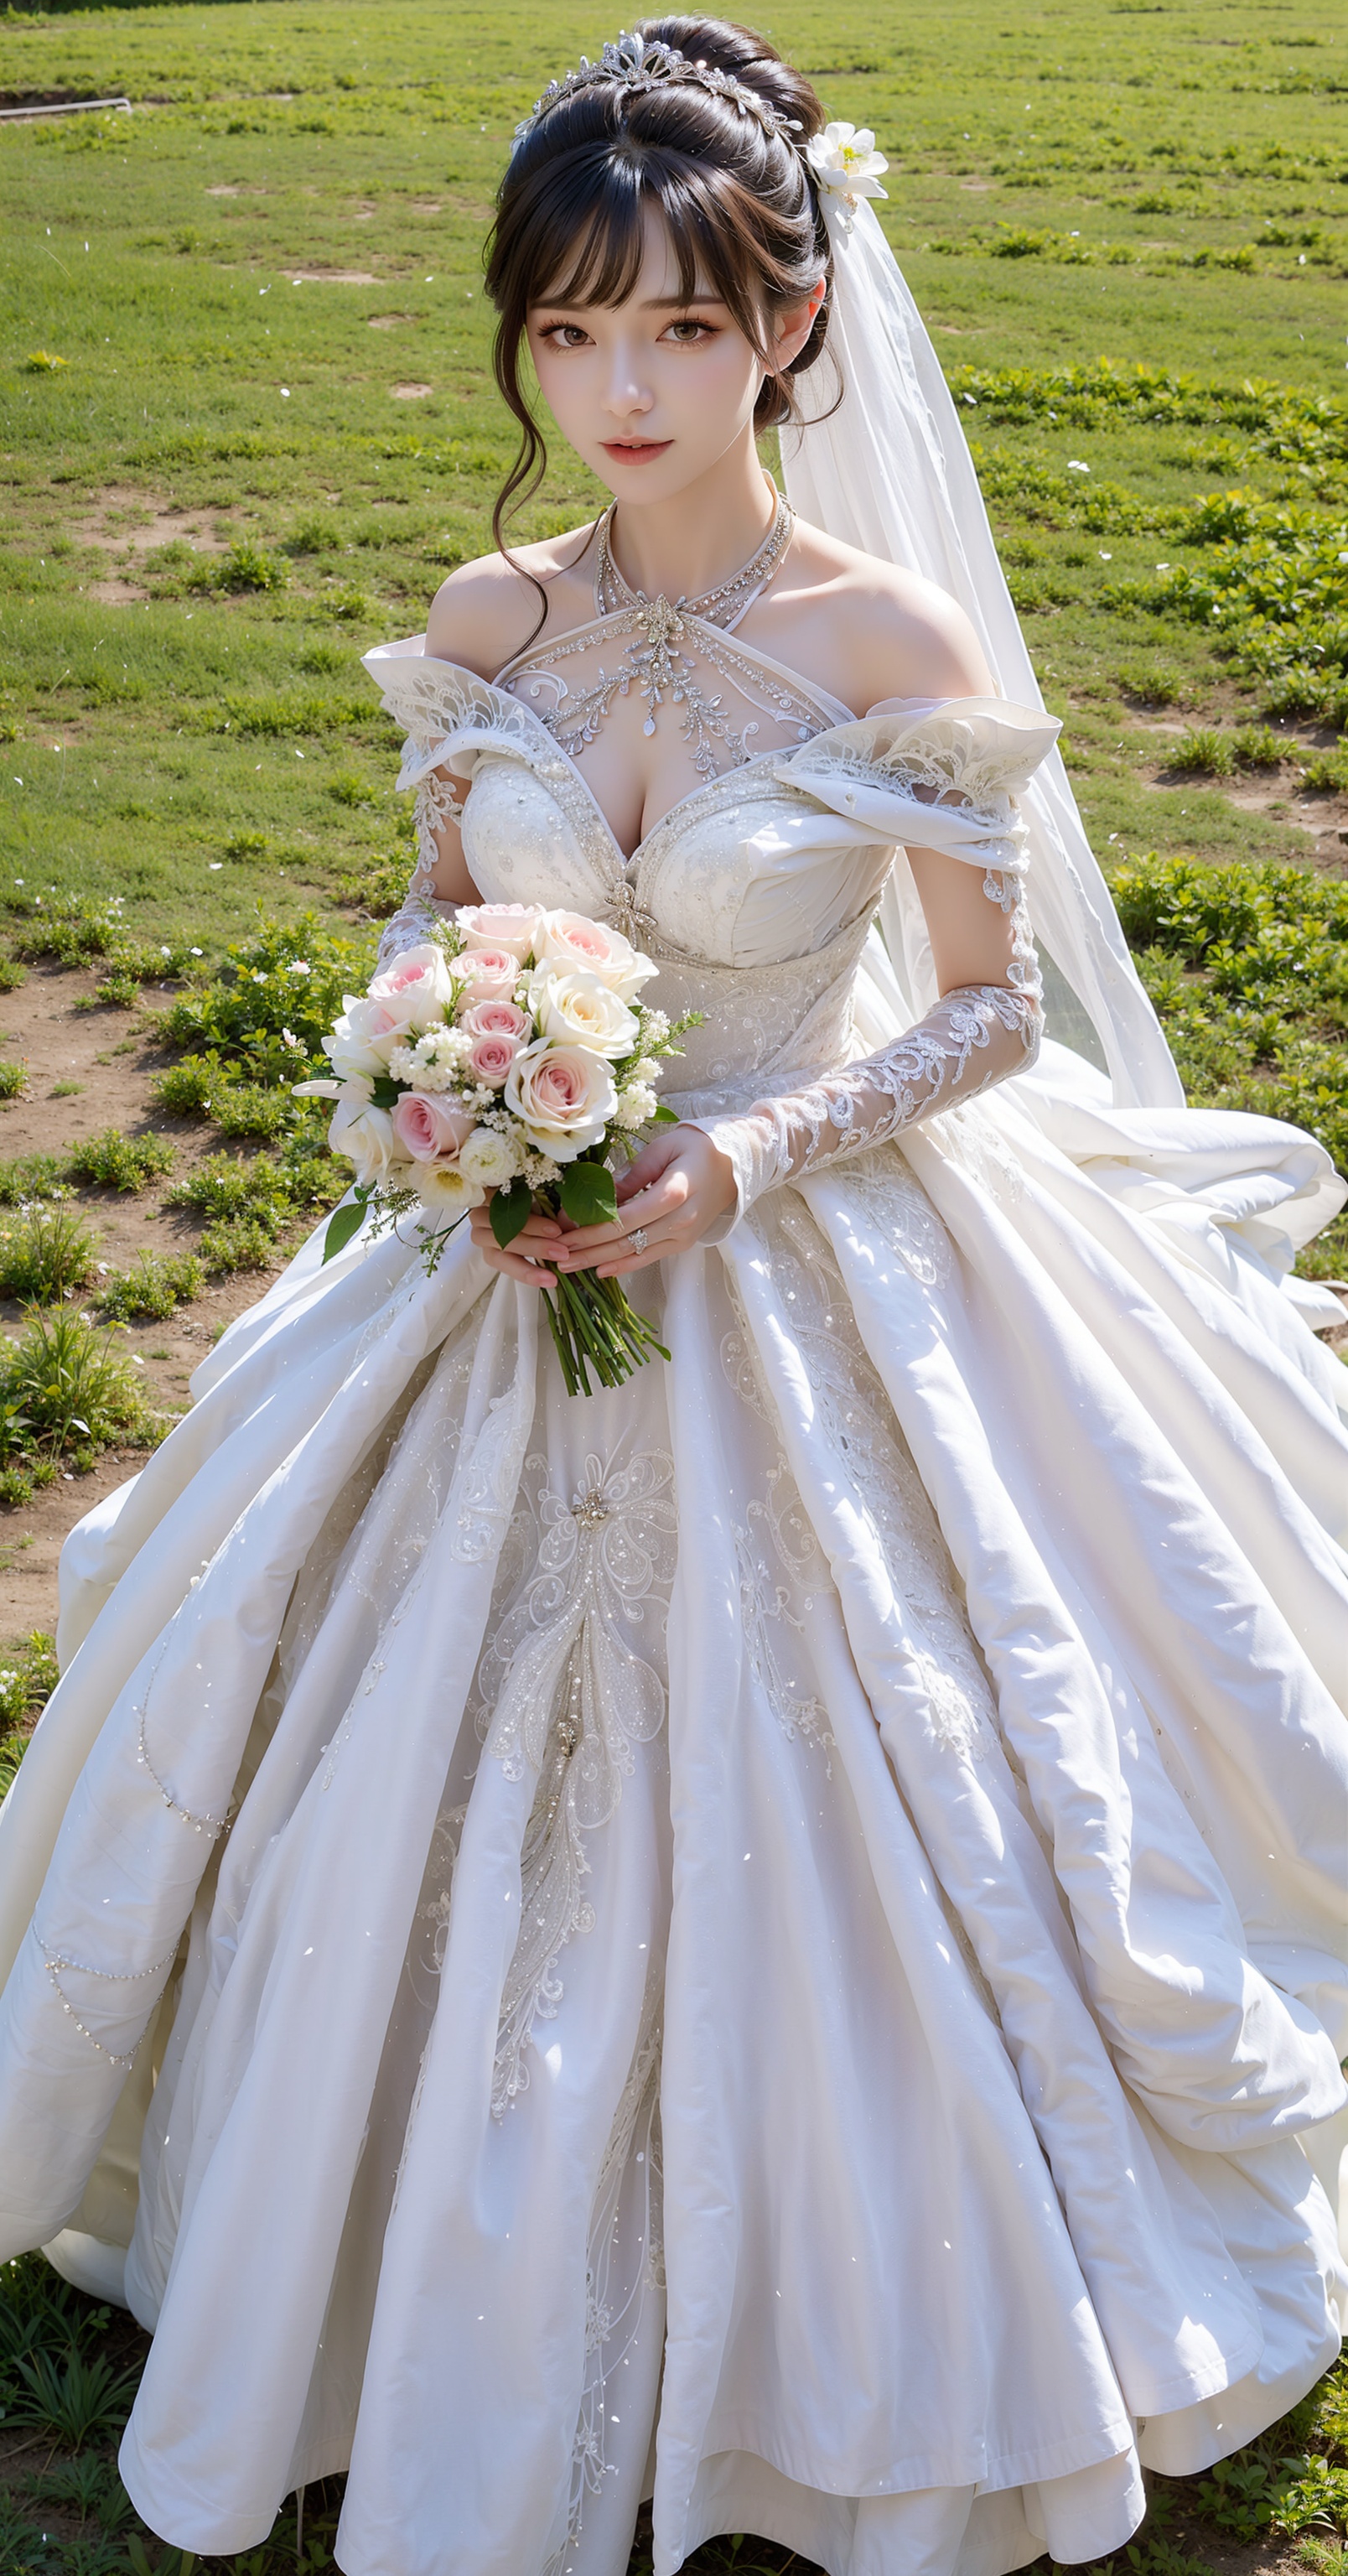 Girl,  curly hair,  wearing stunning wedding dress,  white wedding dress,  holding flowers,  wedding,  flowers,  grass,<lora:EMS-39509-EMS:0.300000>,<lora:EMS-7720-EMS:-0.300000>,<lora:EMS-40340-EMS:0.700000>,<lora:EMS-223884-EMS:0.800000>